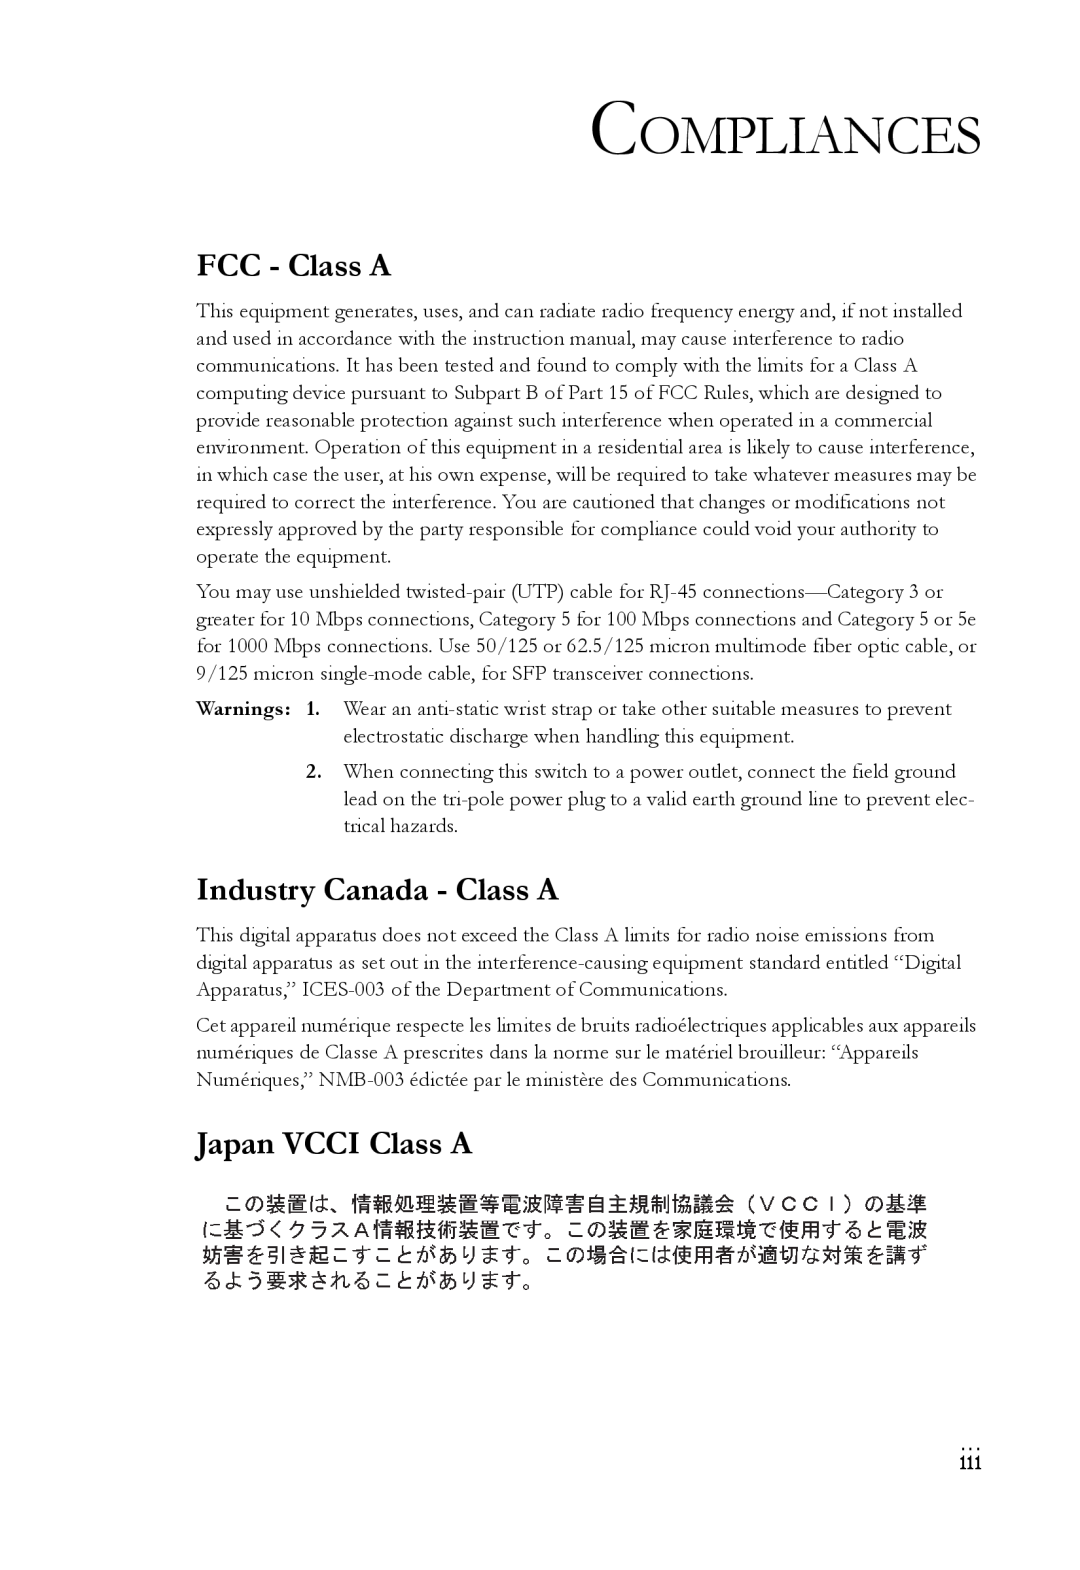 SMC Networks SMC8624T manual Compliances, FCC - Class A, Industry Canada - Class A, Japan VCCI Class A 